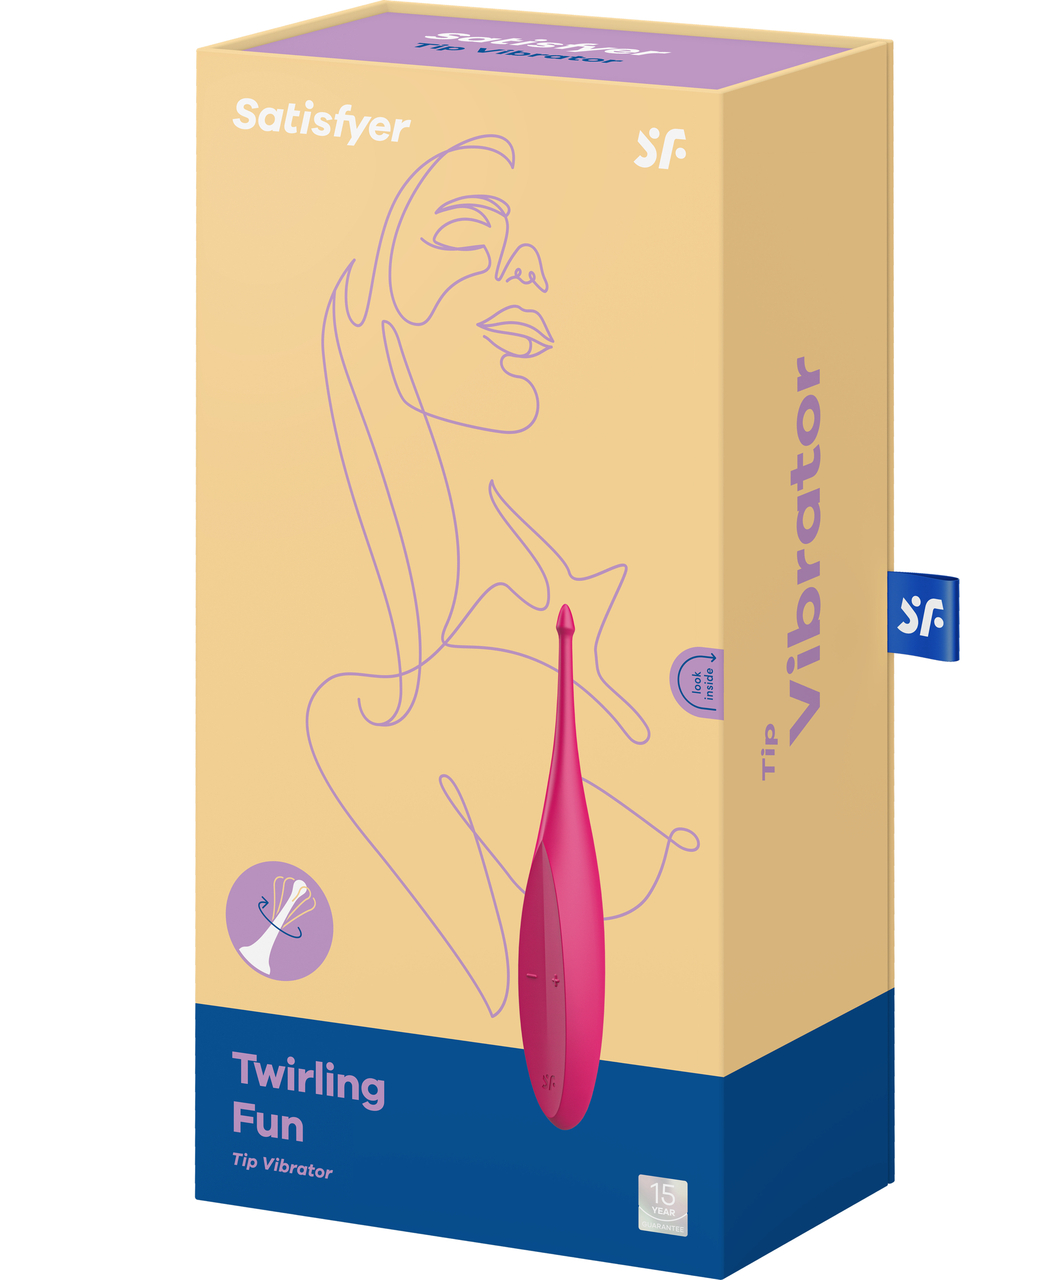 Satisfyer Twirling Fun clitoral stimulator